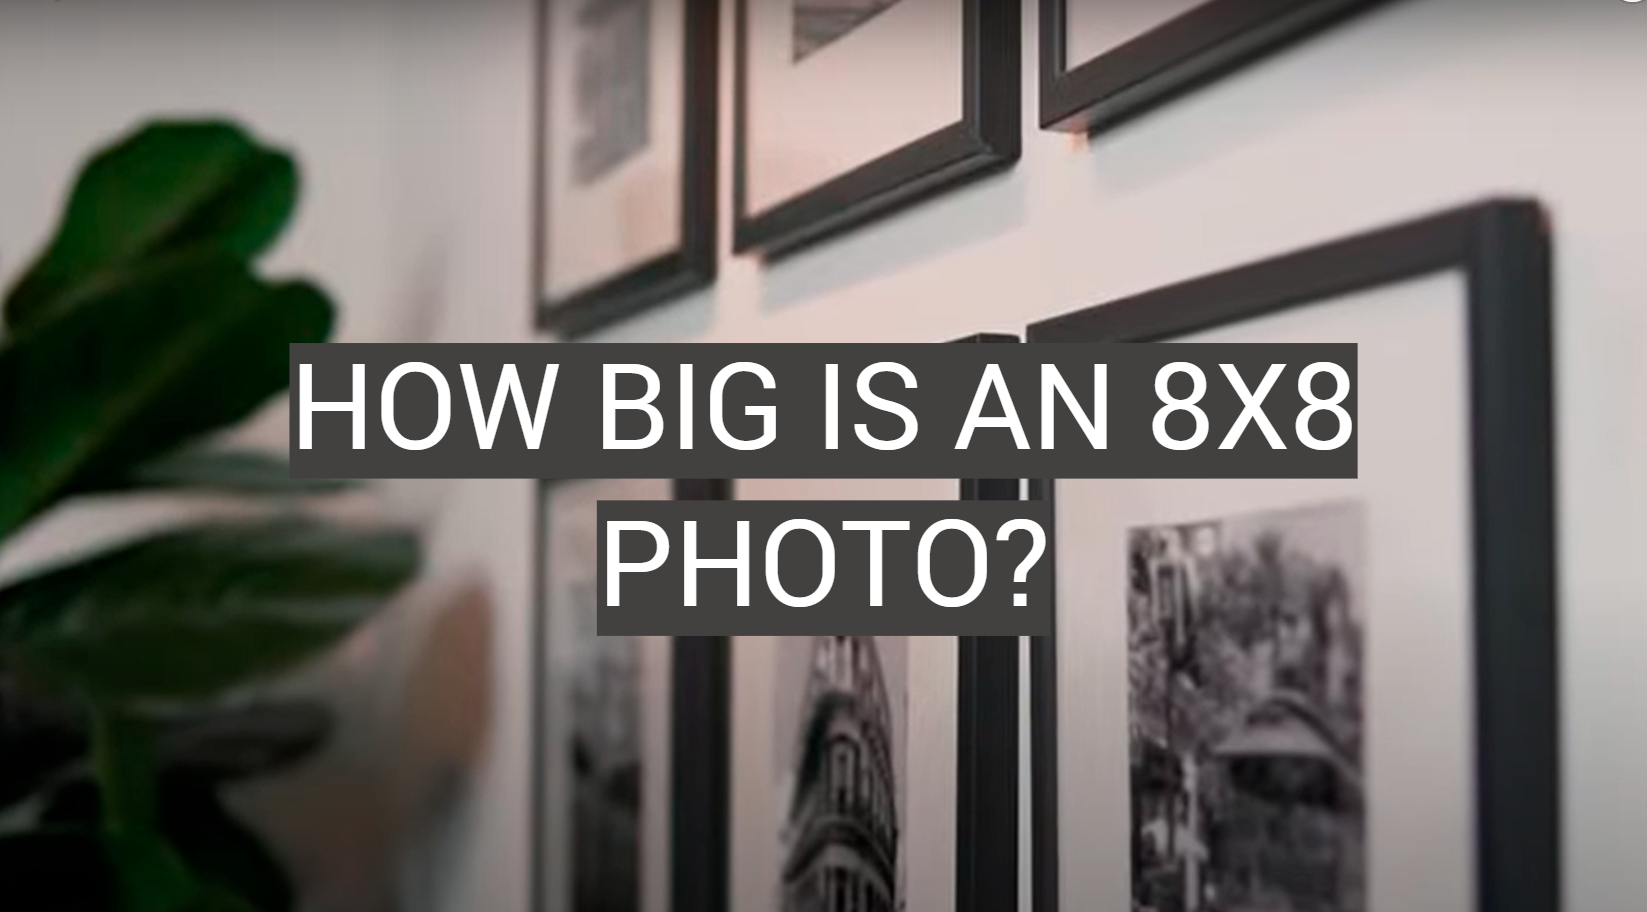 How Big Are 8x8 Photos? - Yea Big